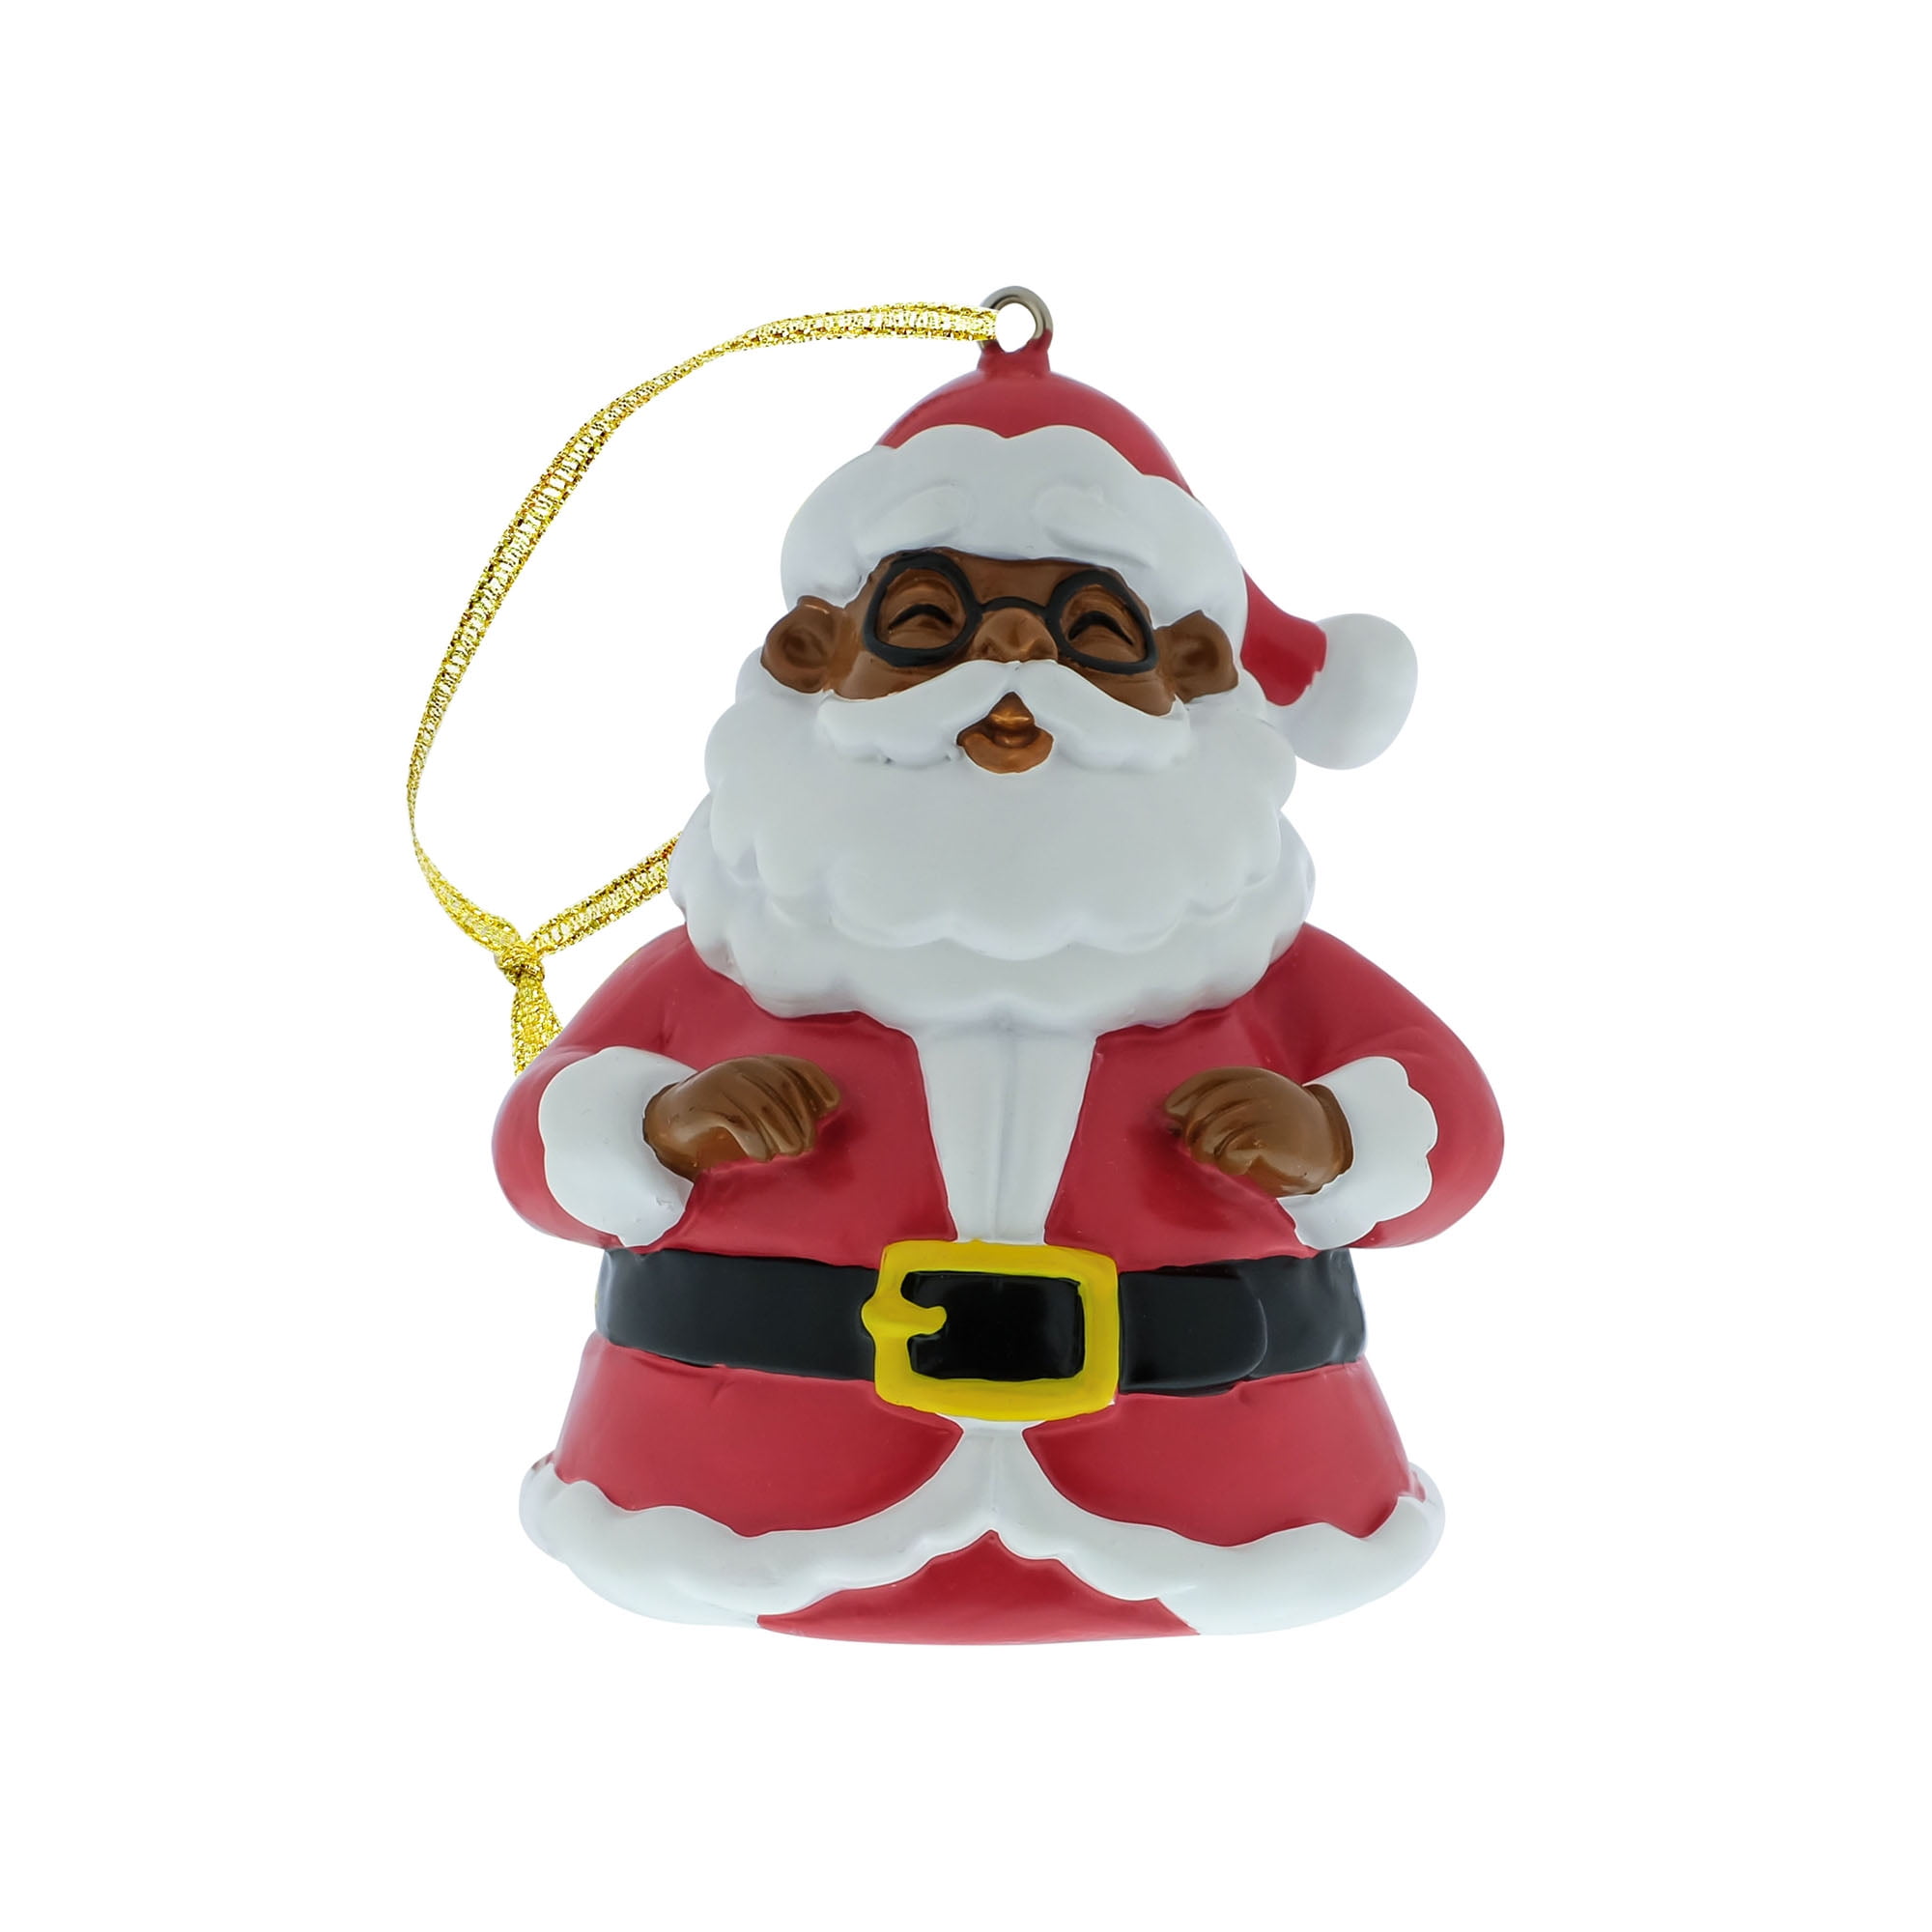 Black Paper Party, Santa Figurine Ornament, 3 inches Tall, Resin, Multi-Color